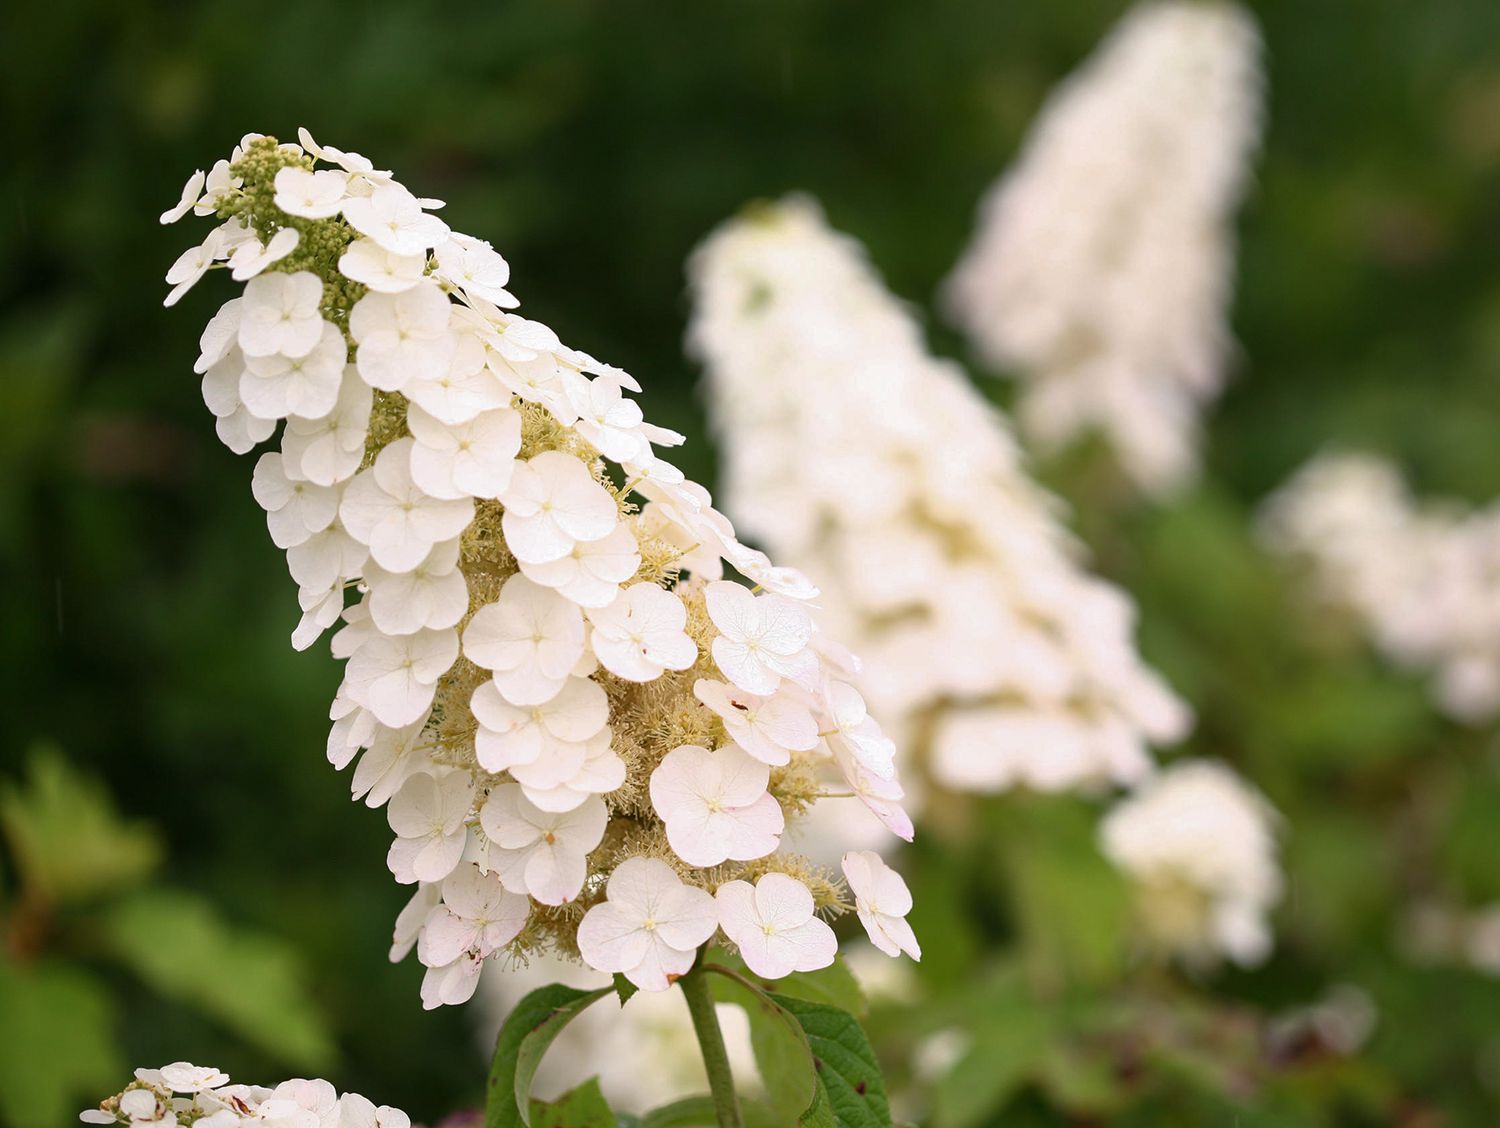 white hydrangea flowers